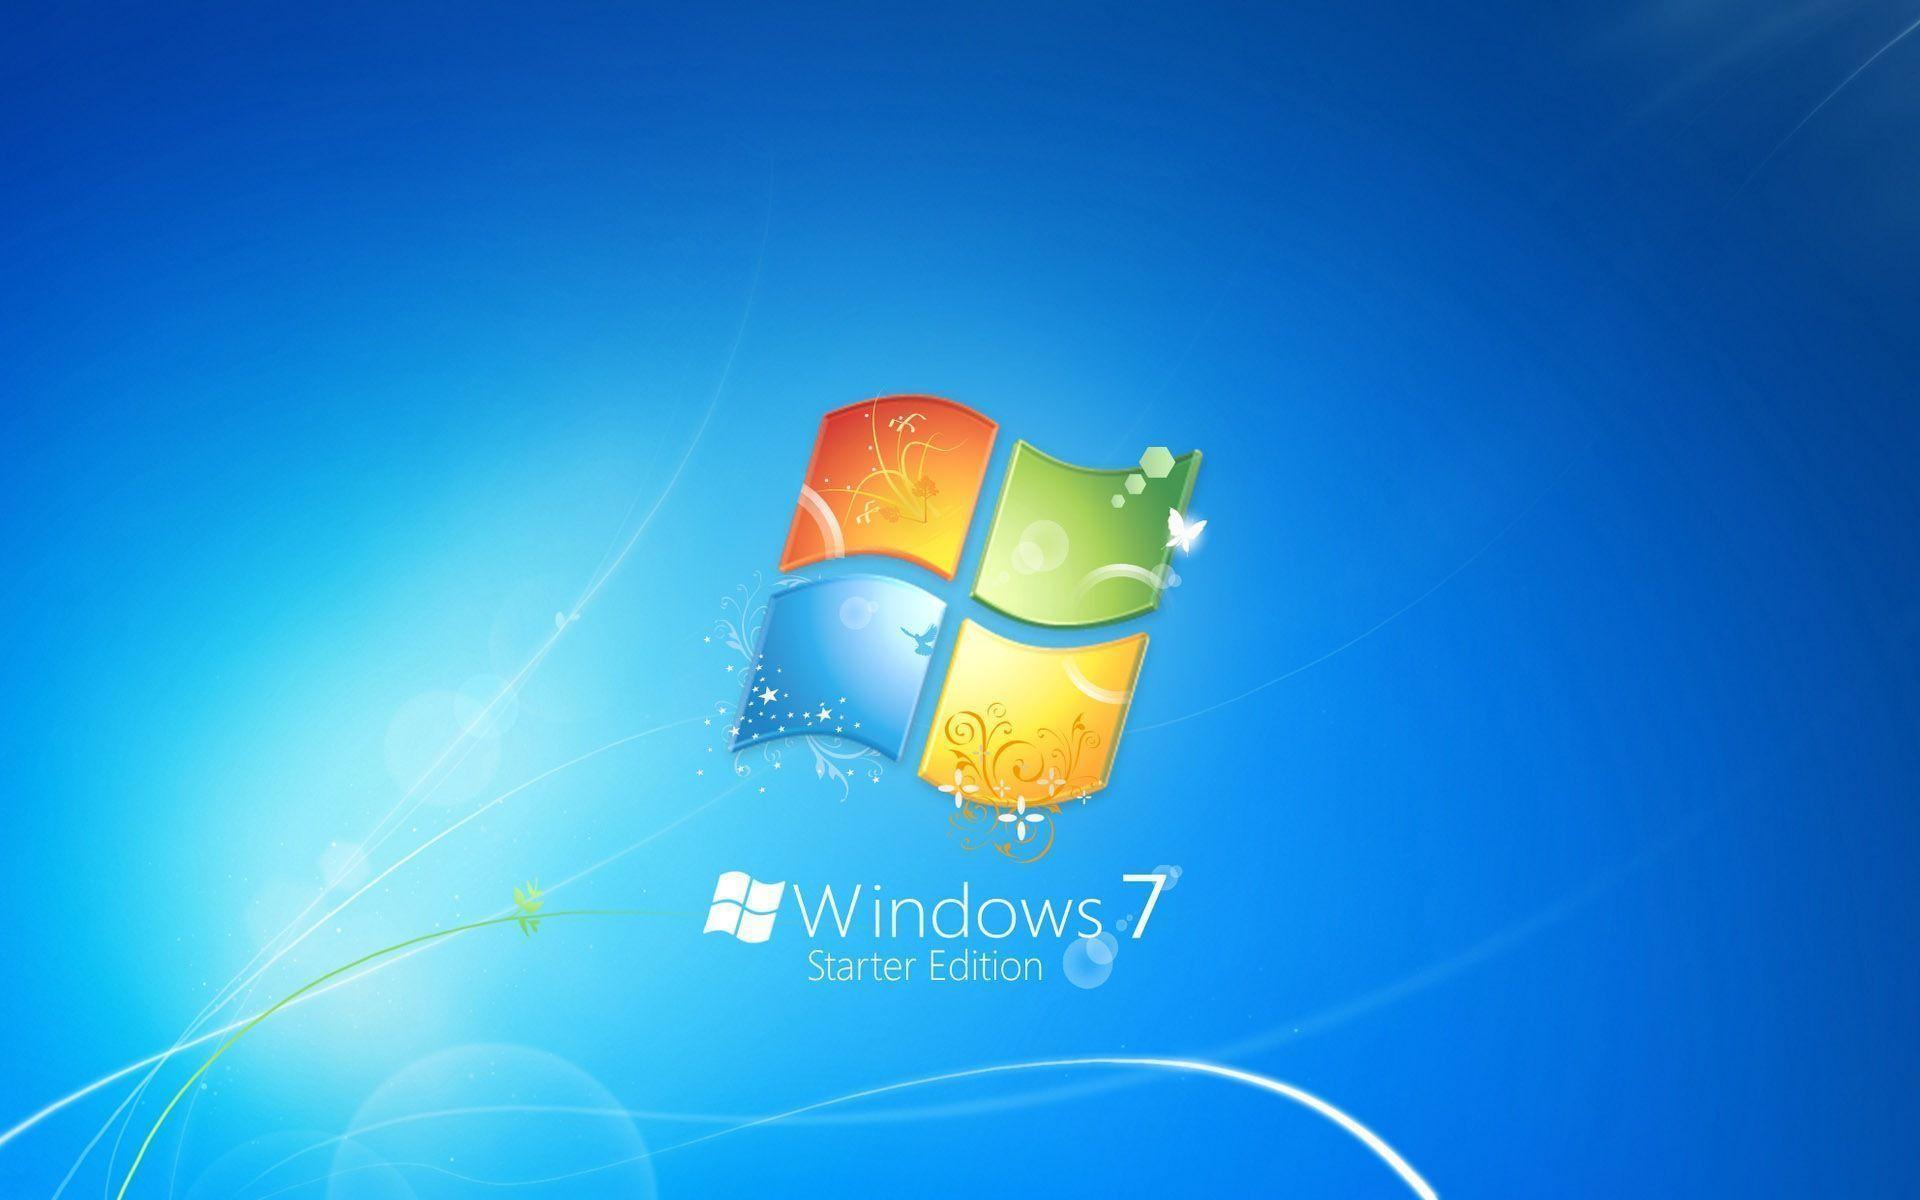 Windows7 theme blue background logo Wallpaper. HD Desktop